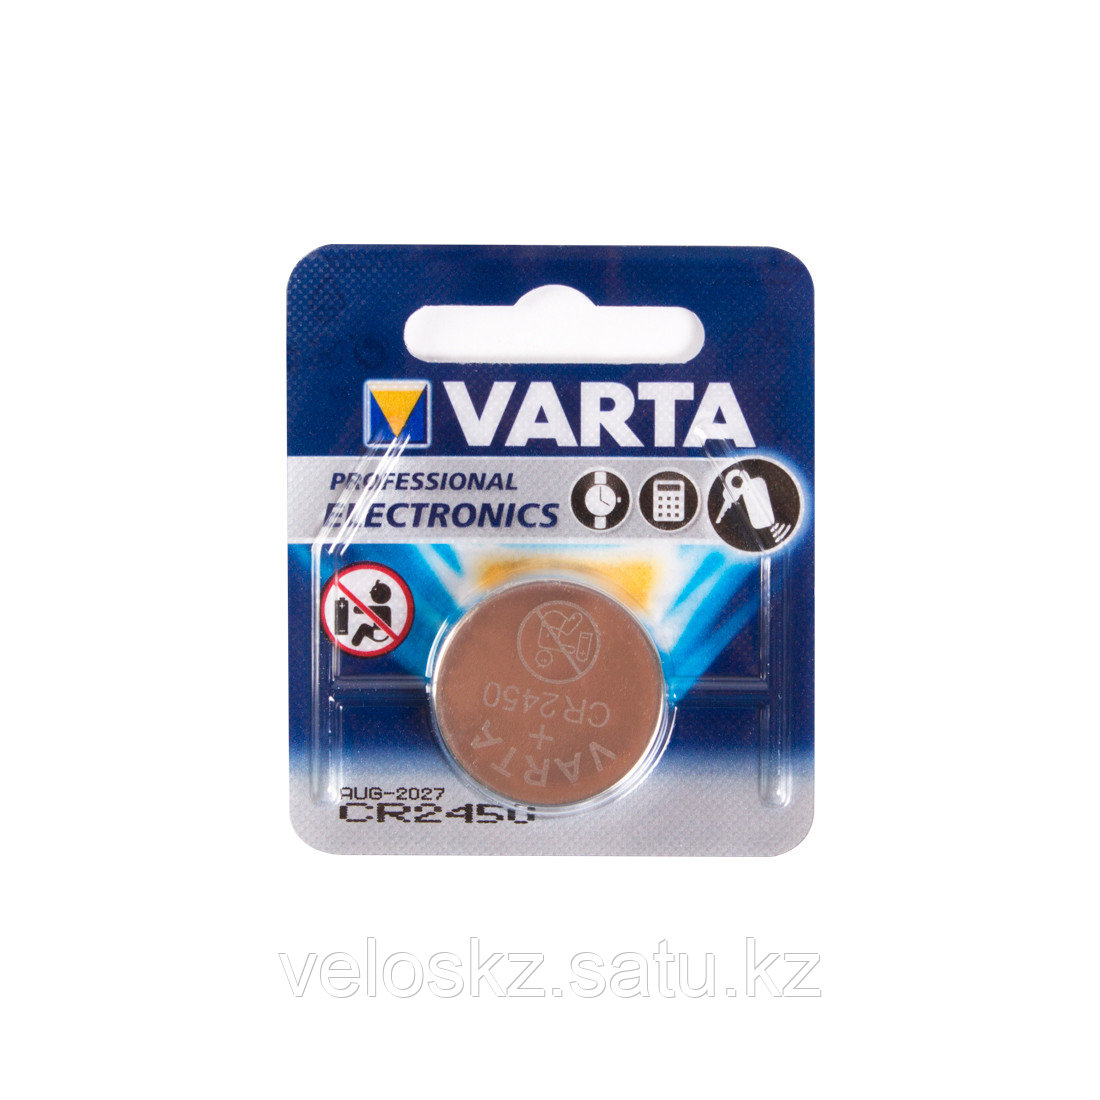 Varta Батарейка, VARTA, CR2450, 3V, 560 мАч, Professional Electronics, 1 шт. в Блистере